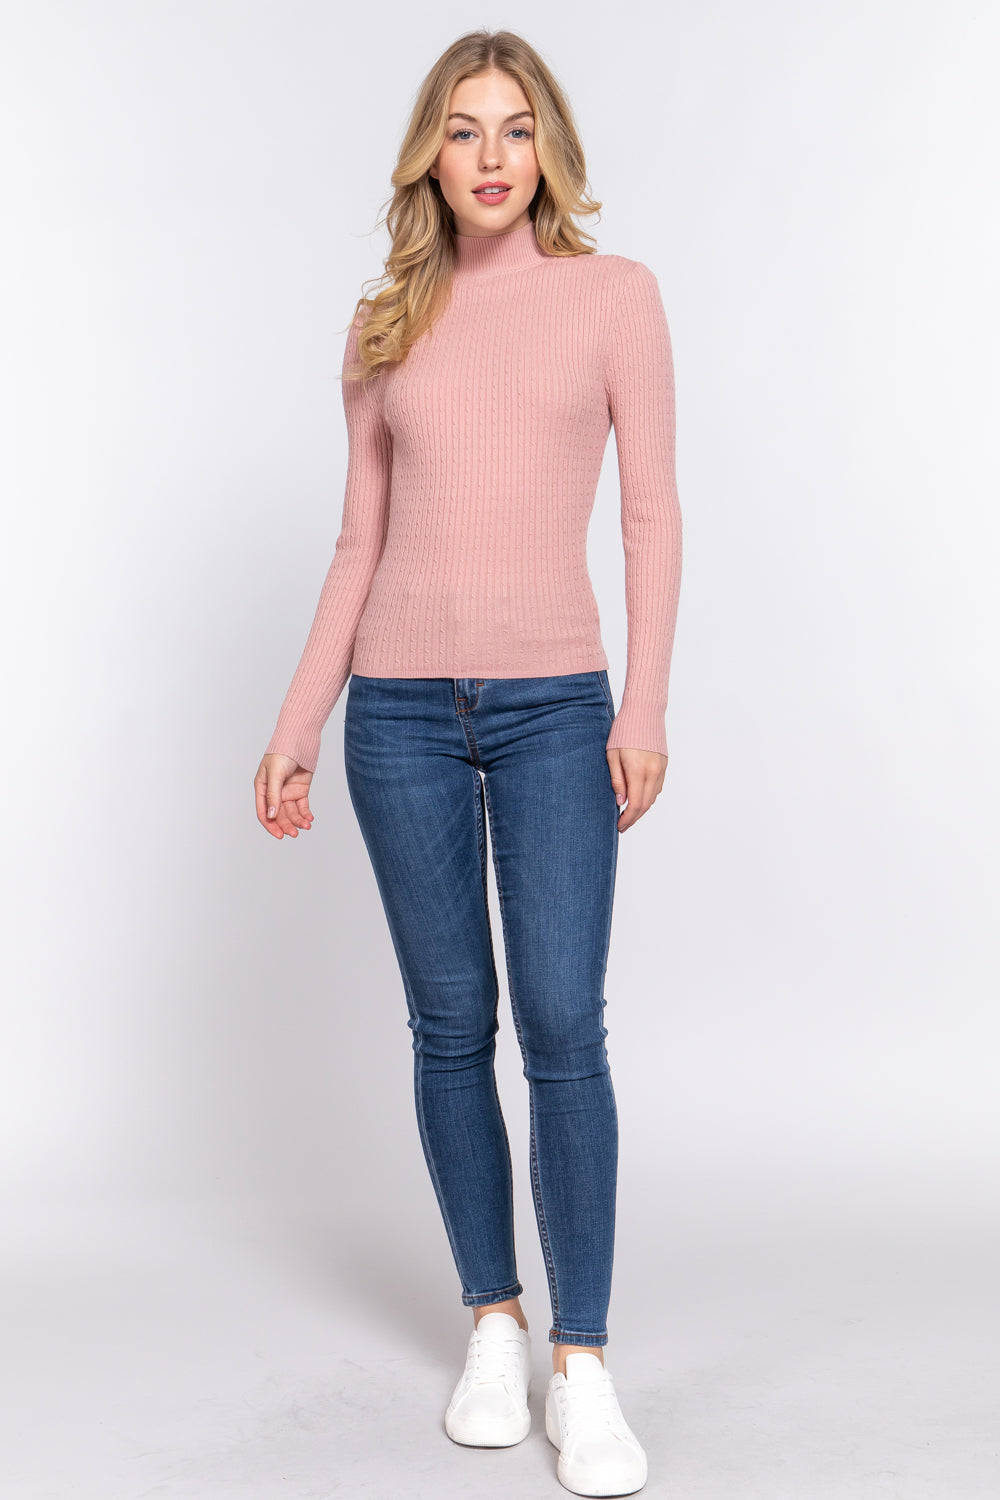 Active Basic Ribbed Mock Neck Sweater Shirts & Tops RYSE Clothing Co. Pink S 